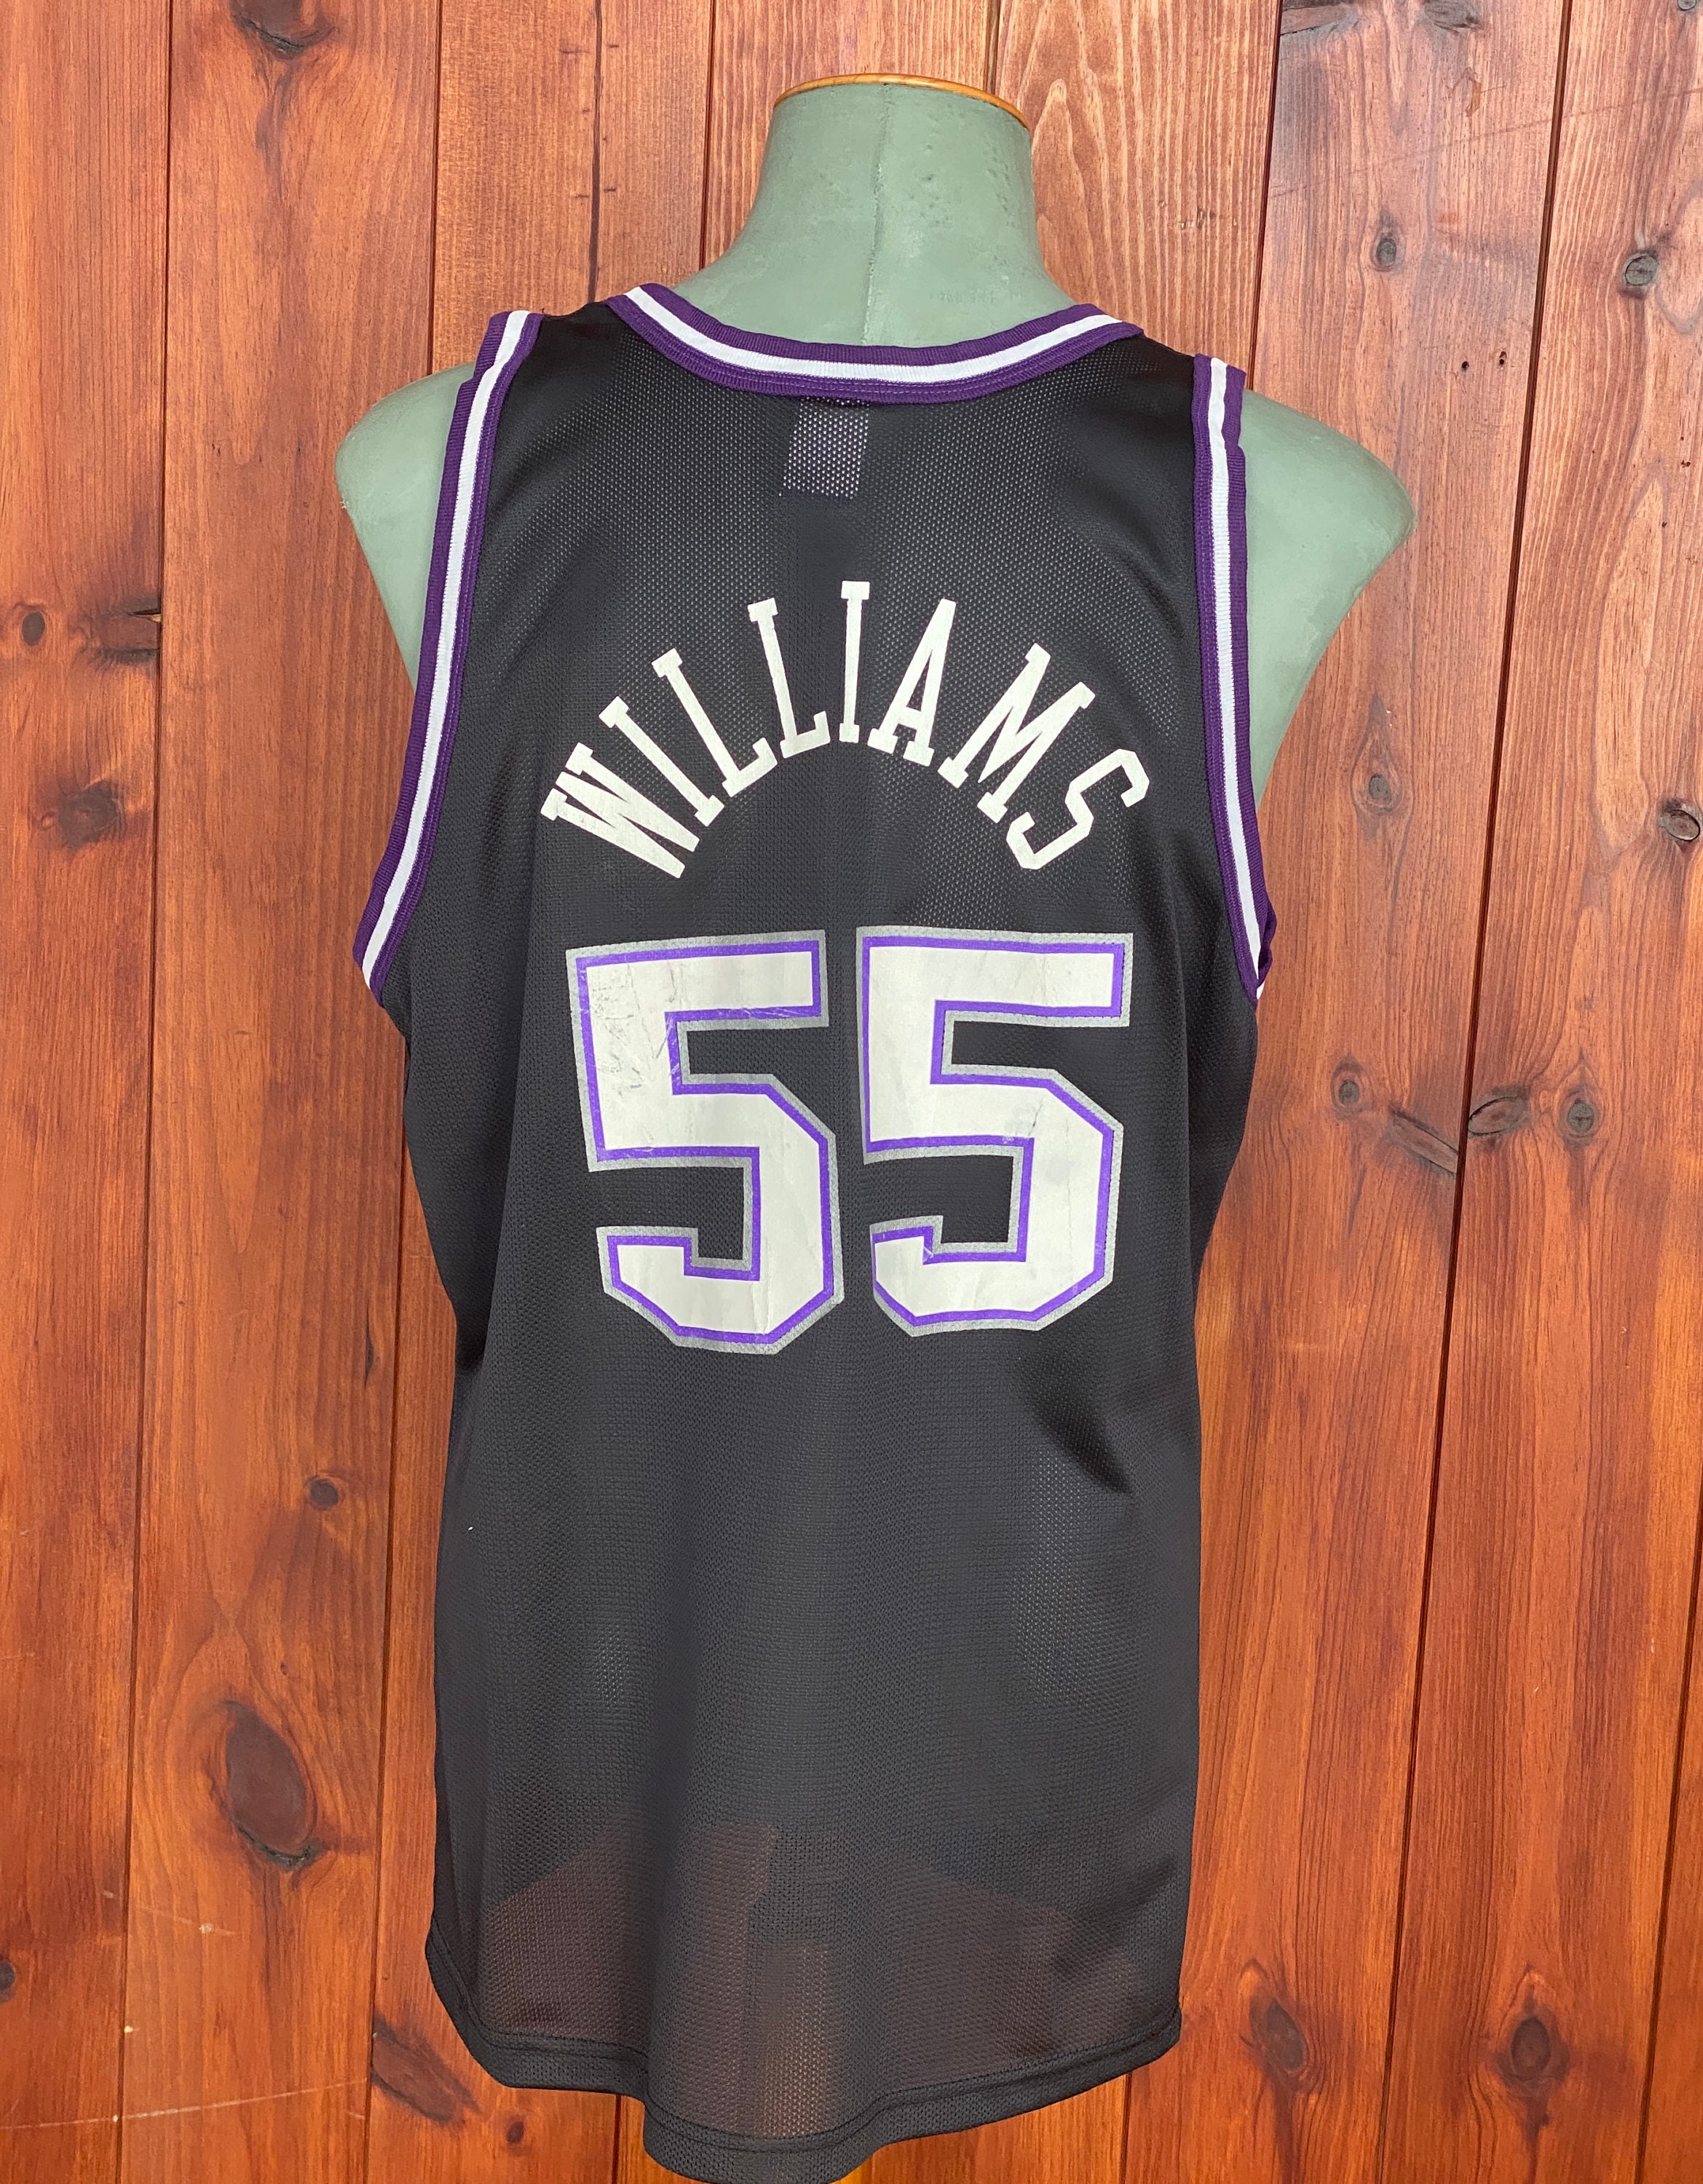 Wholesale Jason Williams #55 basketball jersey heat transfer james